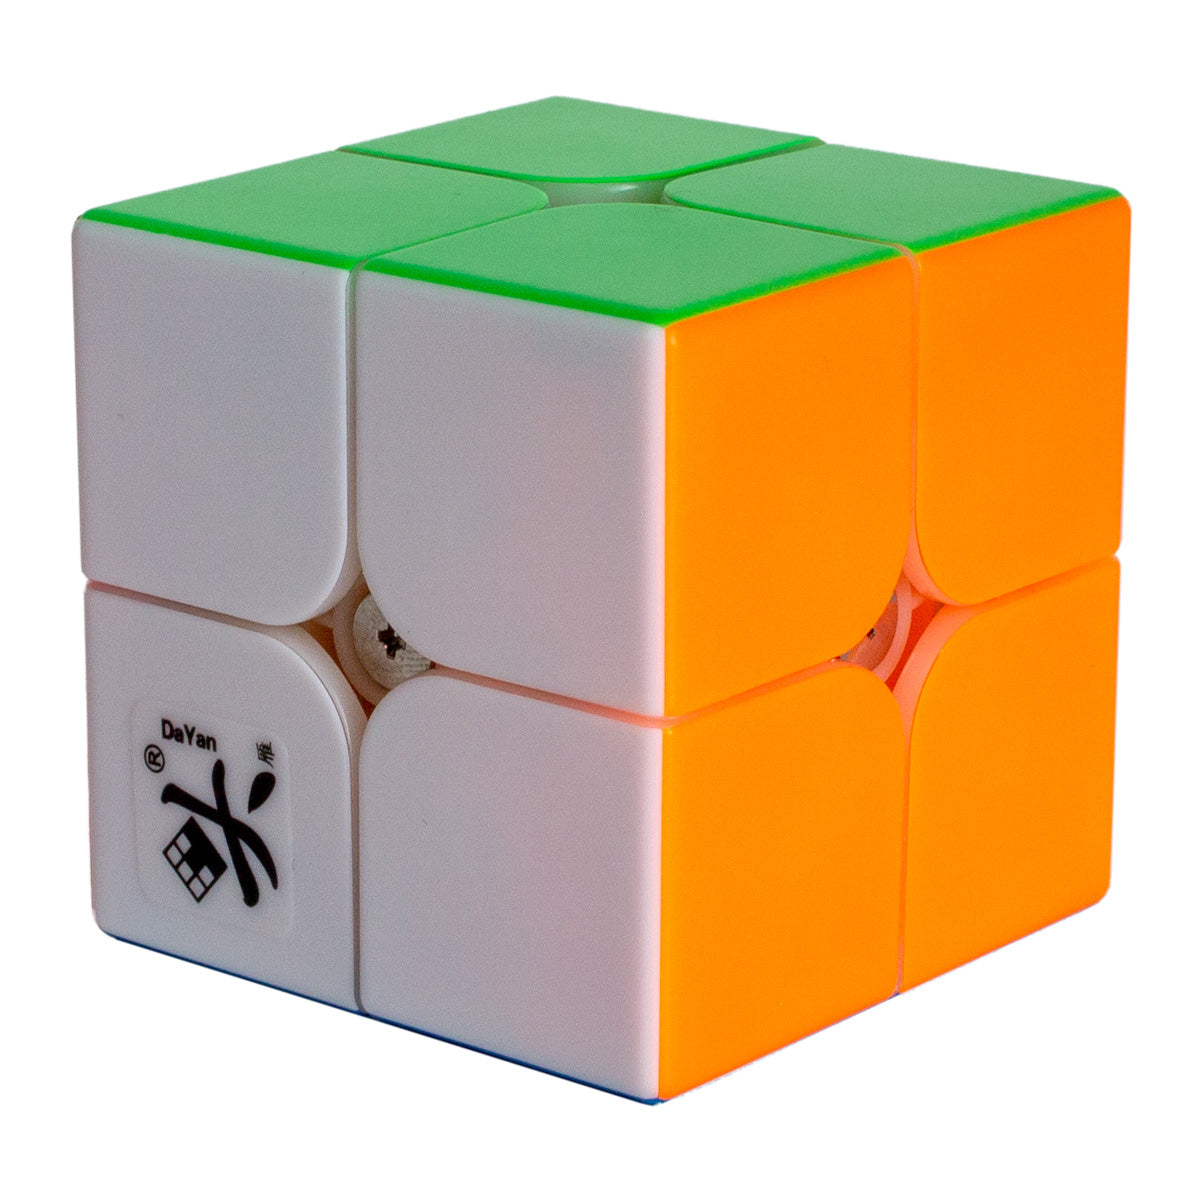 2x2 Speed Cube - Dayan TengYun M on a white background